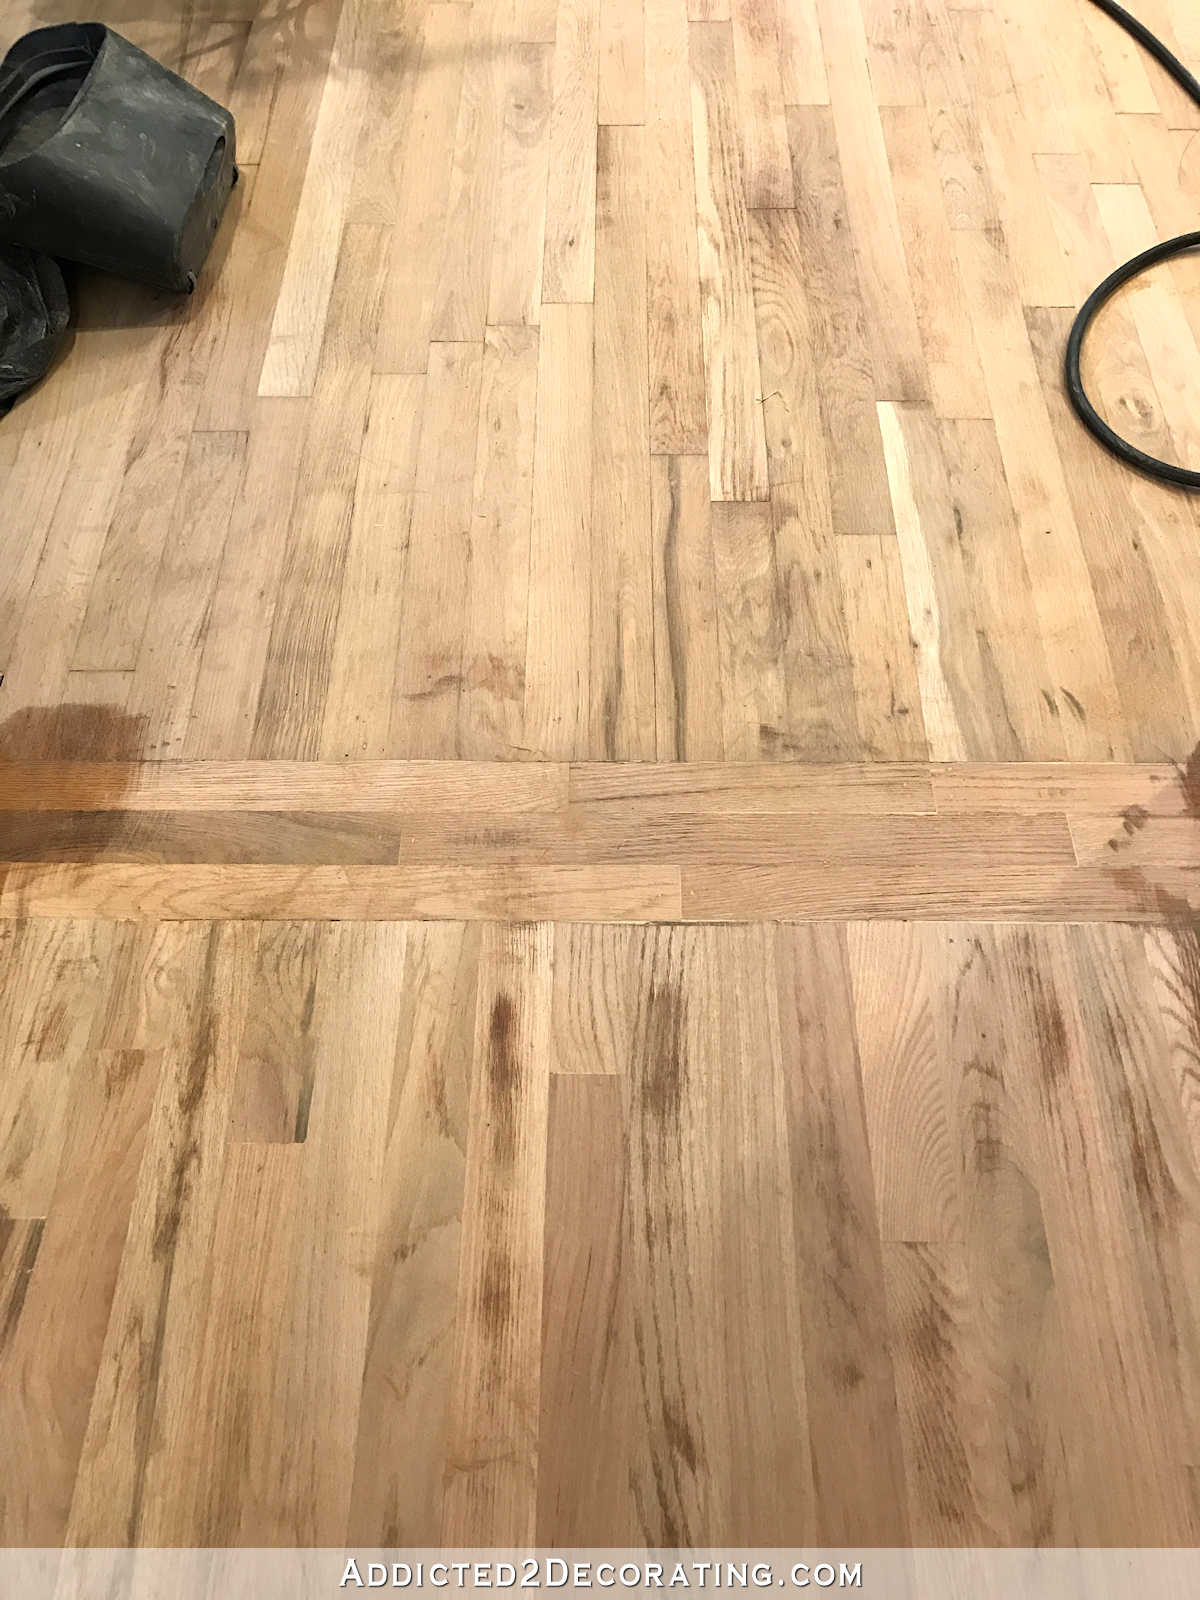 red oak hardwood floors sanded before staining - kitchen to living room